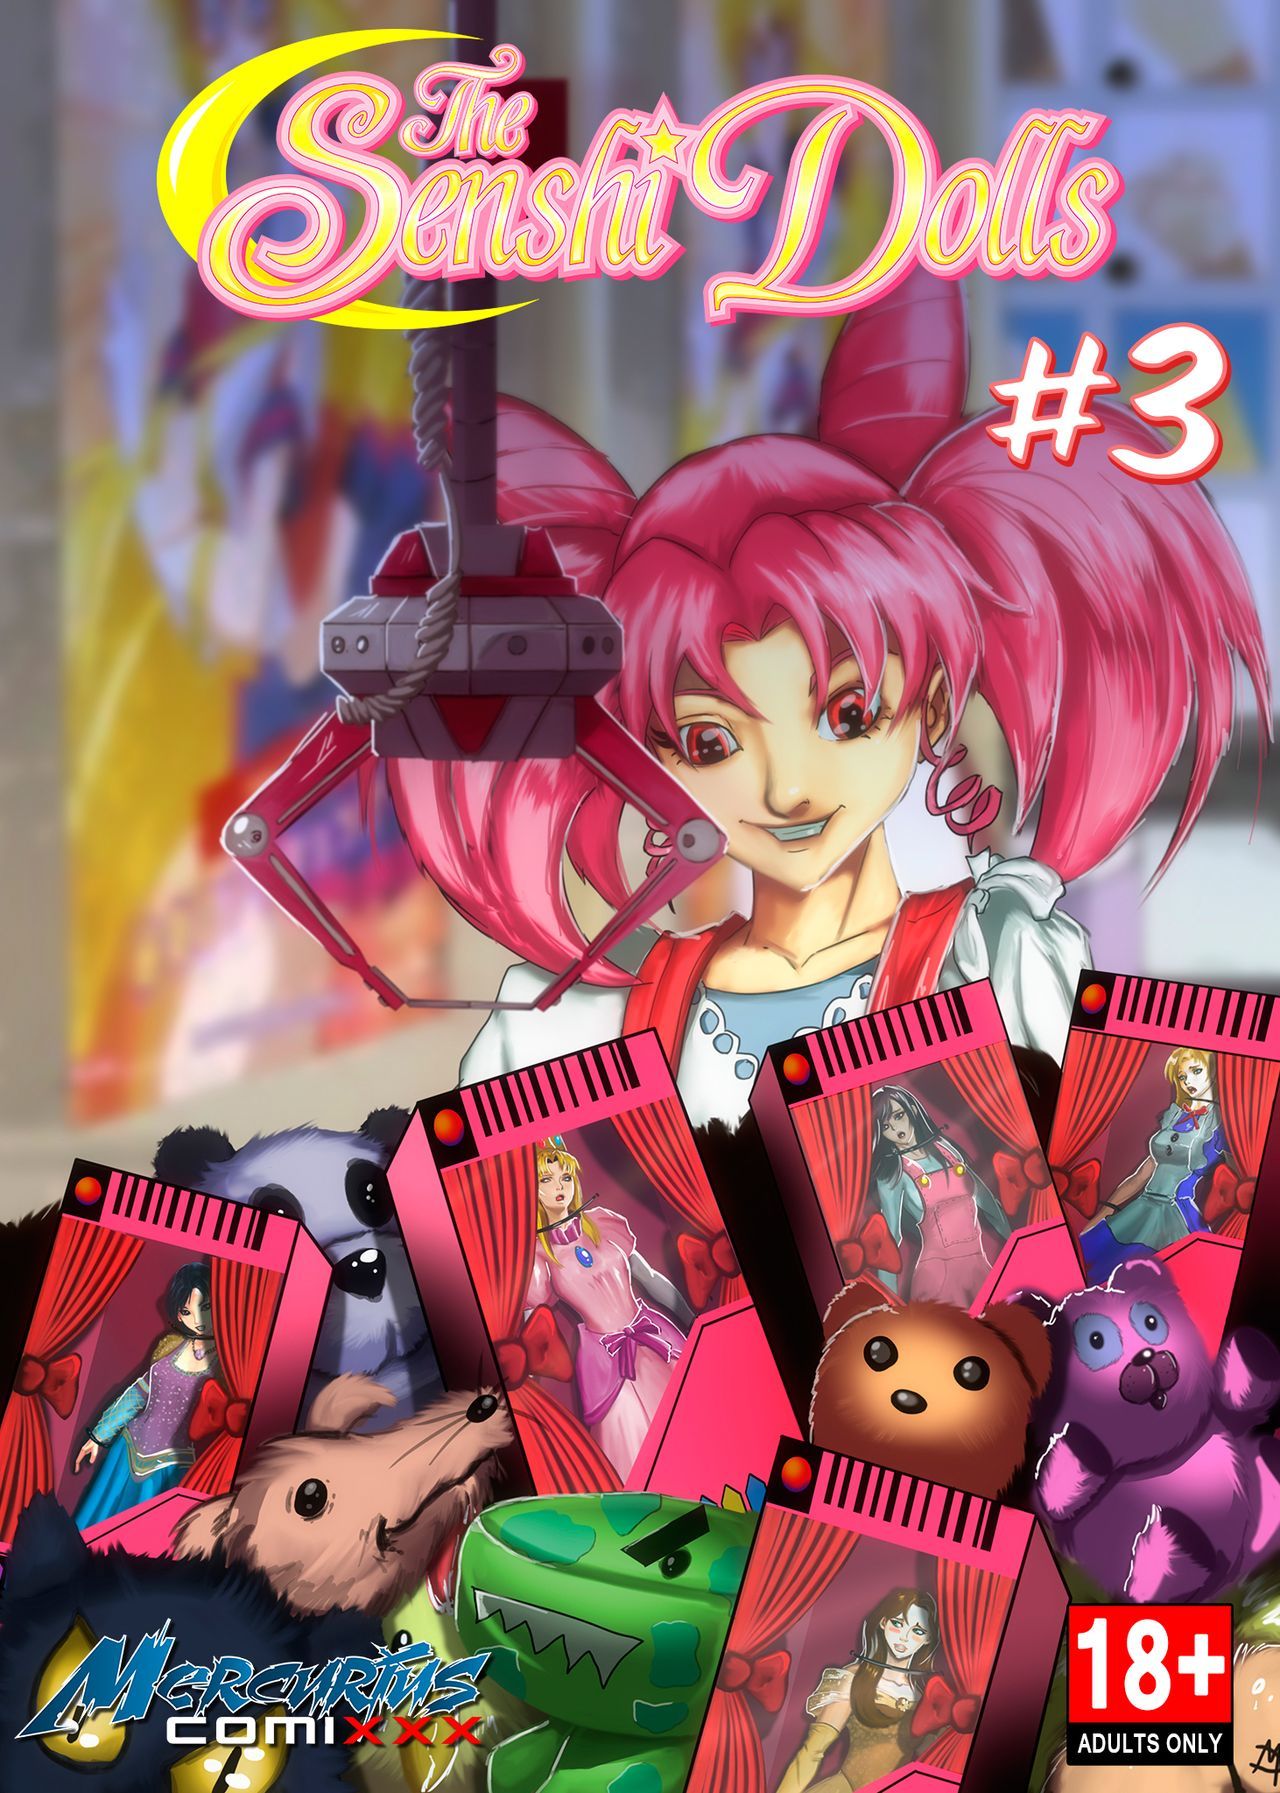 The Senshi Dolls 3 Mistaken (Sailor Moon) page 1